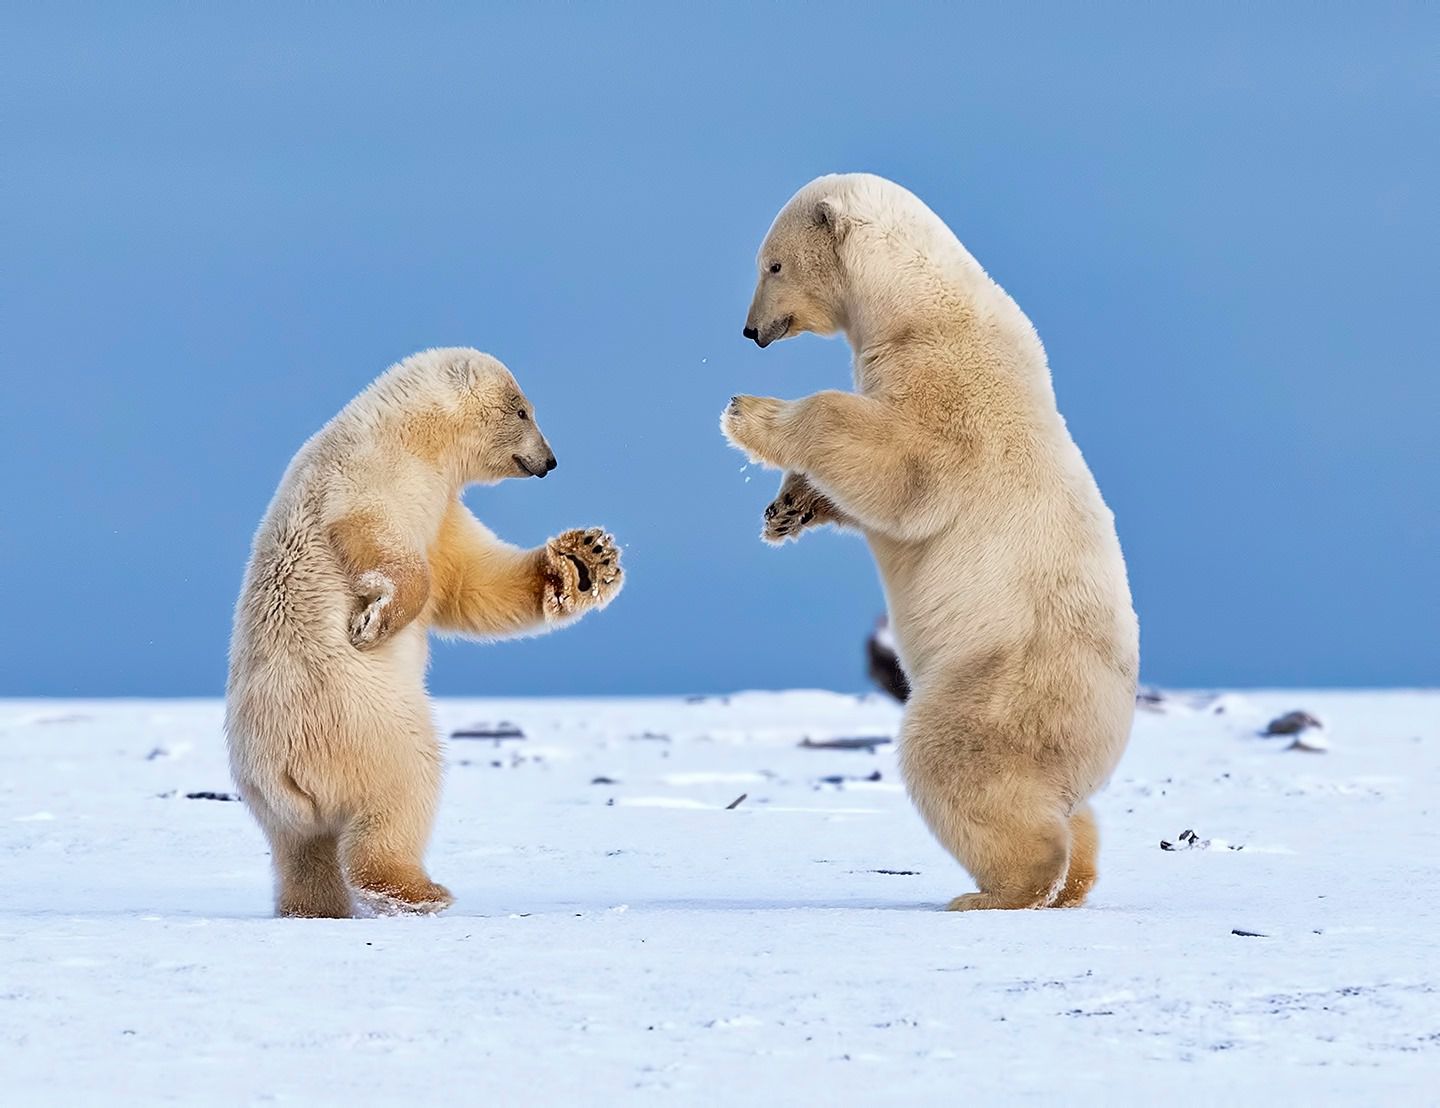 Dancing bear asian milf